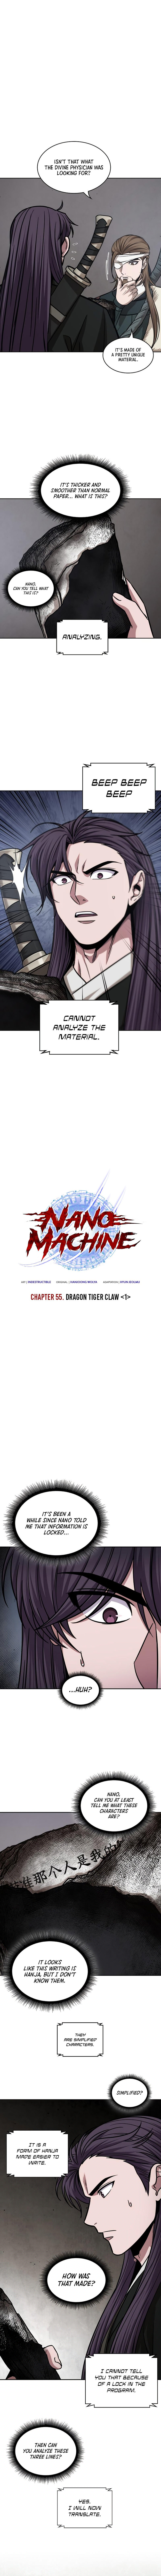 nano-machine-chap-156-1